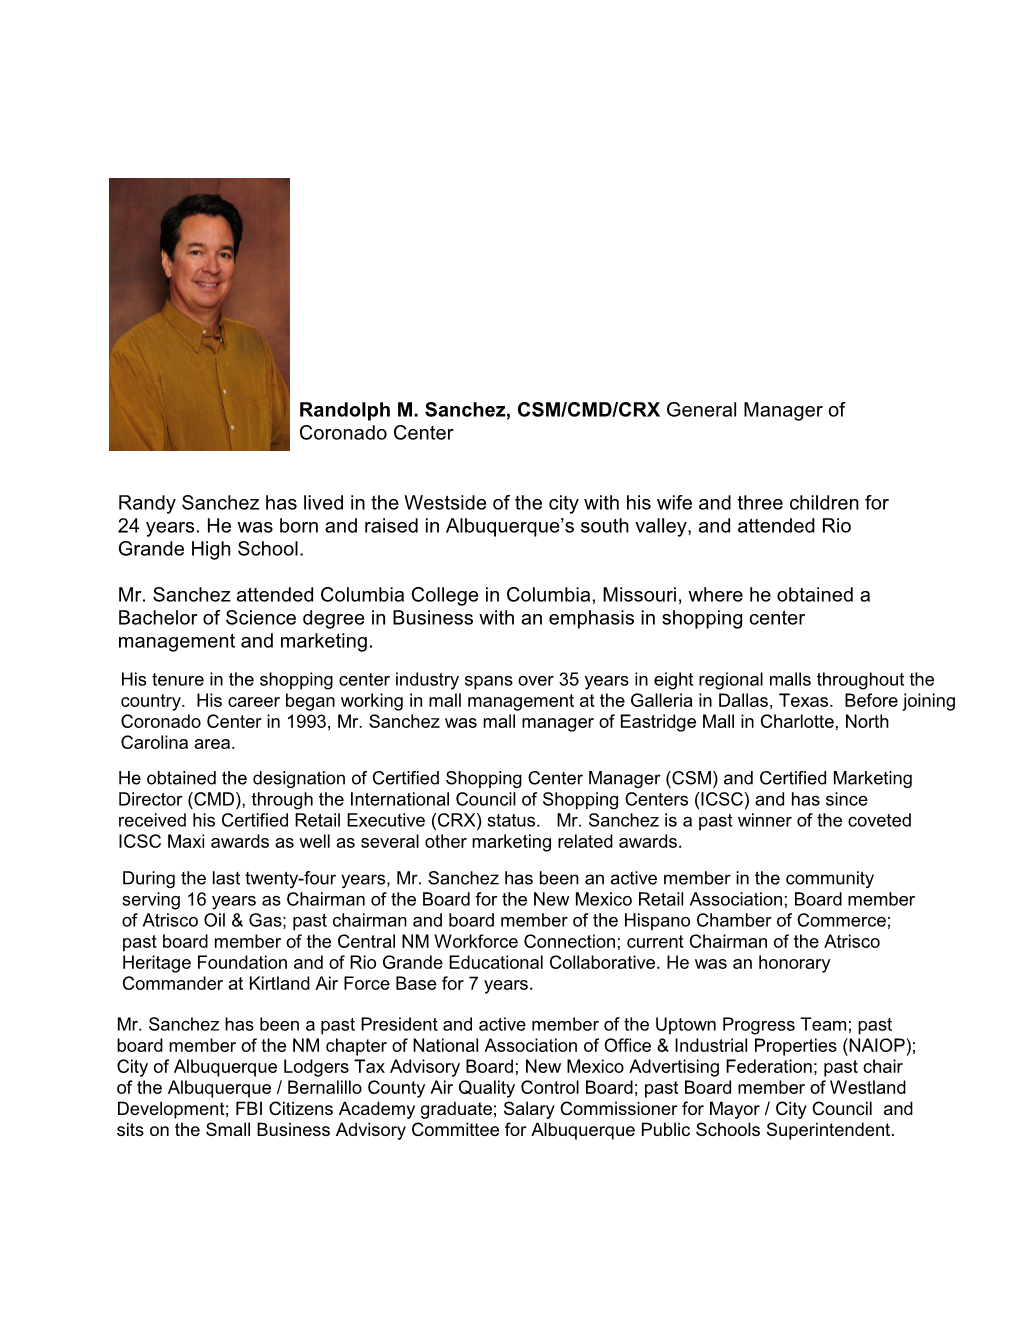 Randolph M. Sanchez, CSM/CMD/CRX General Manager of Coronado Center